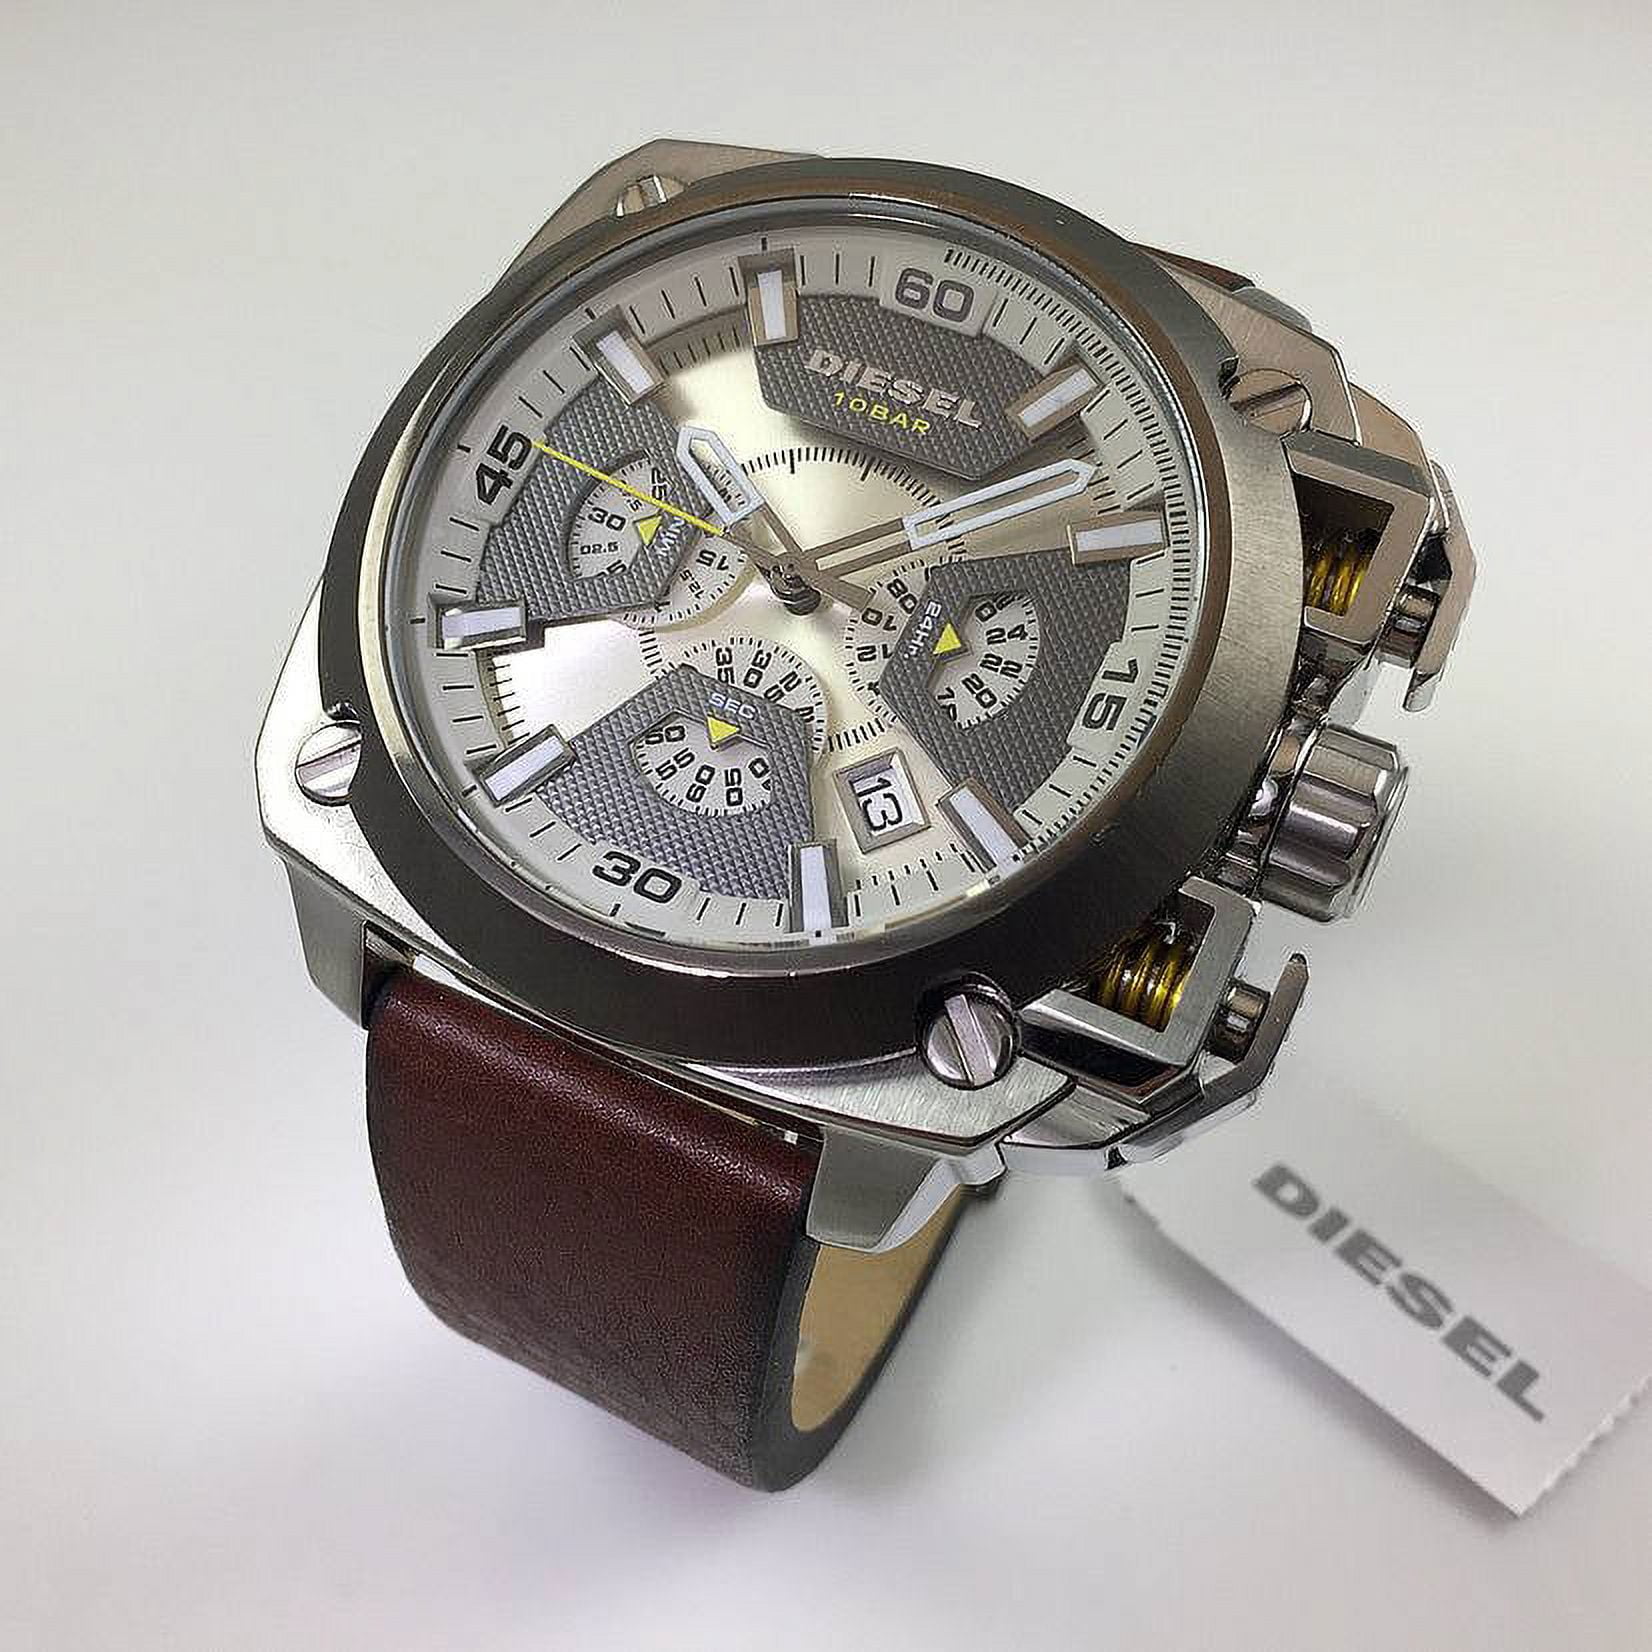 Diesel Bamf Chronograph Leather Strap DZ7343 reloj cuadrado casual cafe  dial blanco para hombre - TIME Guatemala